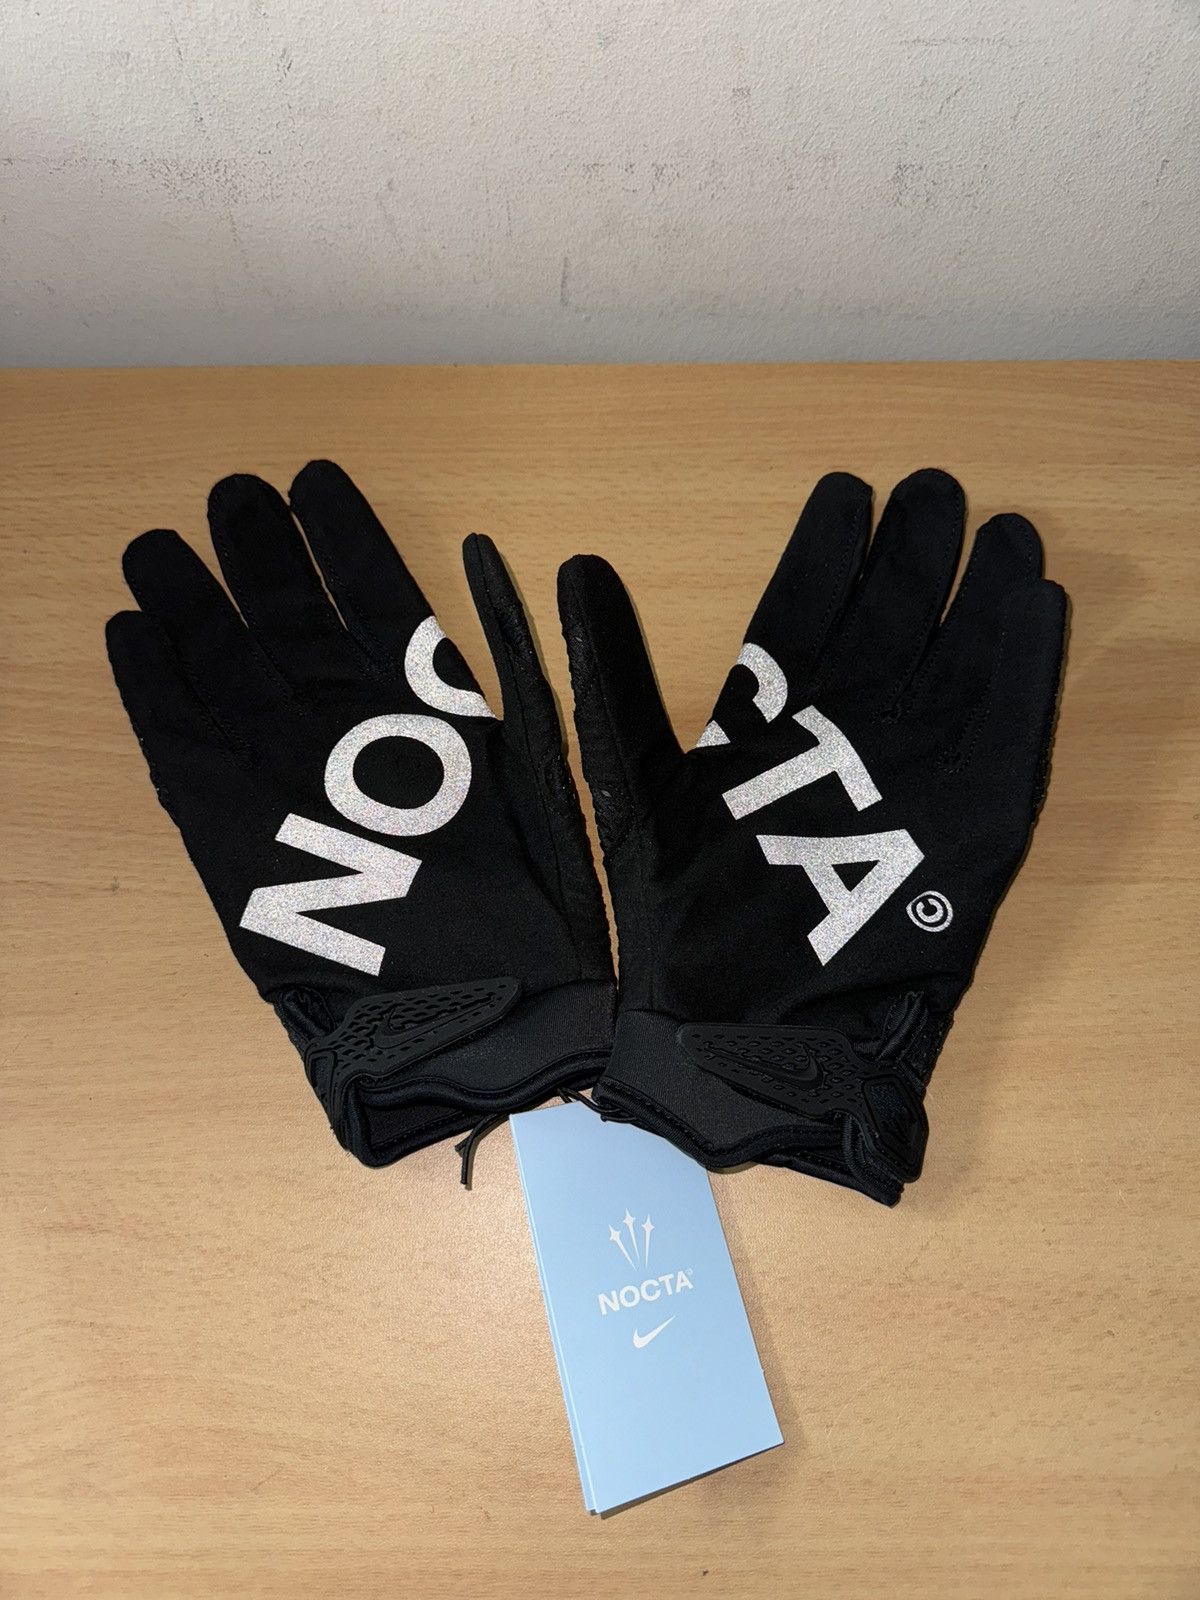 Nike NOCTA Reflective Gloves (M) | Grailed